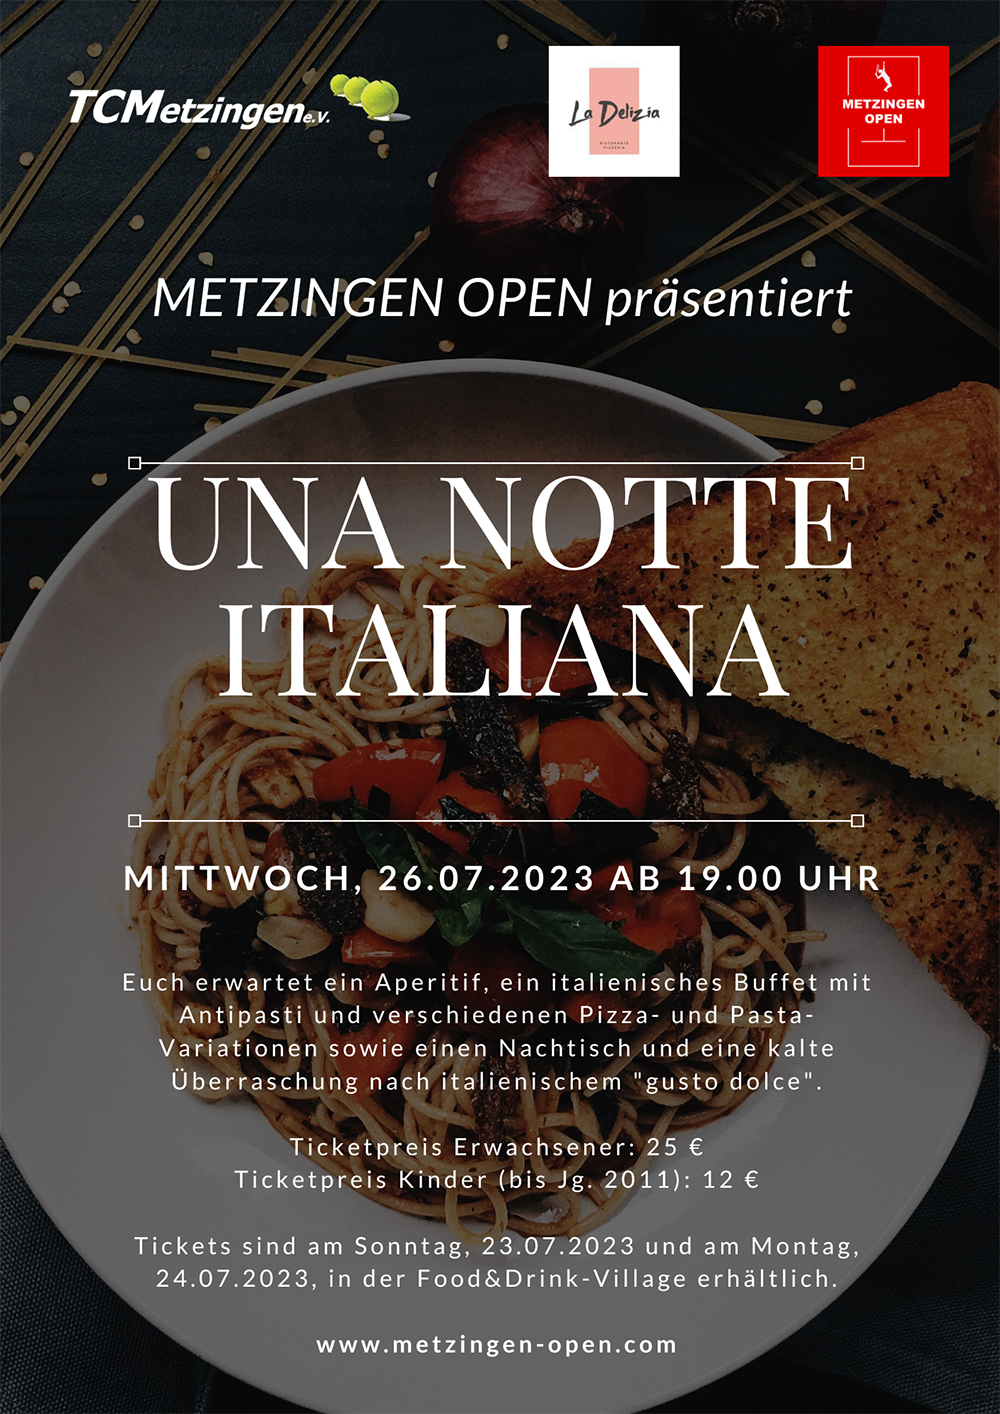 METZINGEN OPEN 2023 - Una notte italiana